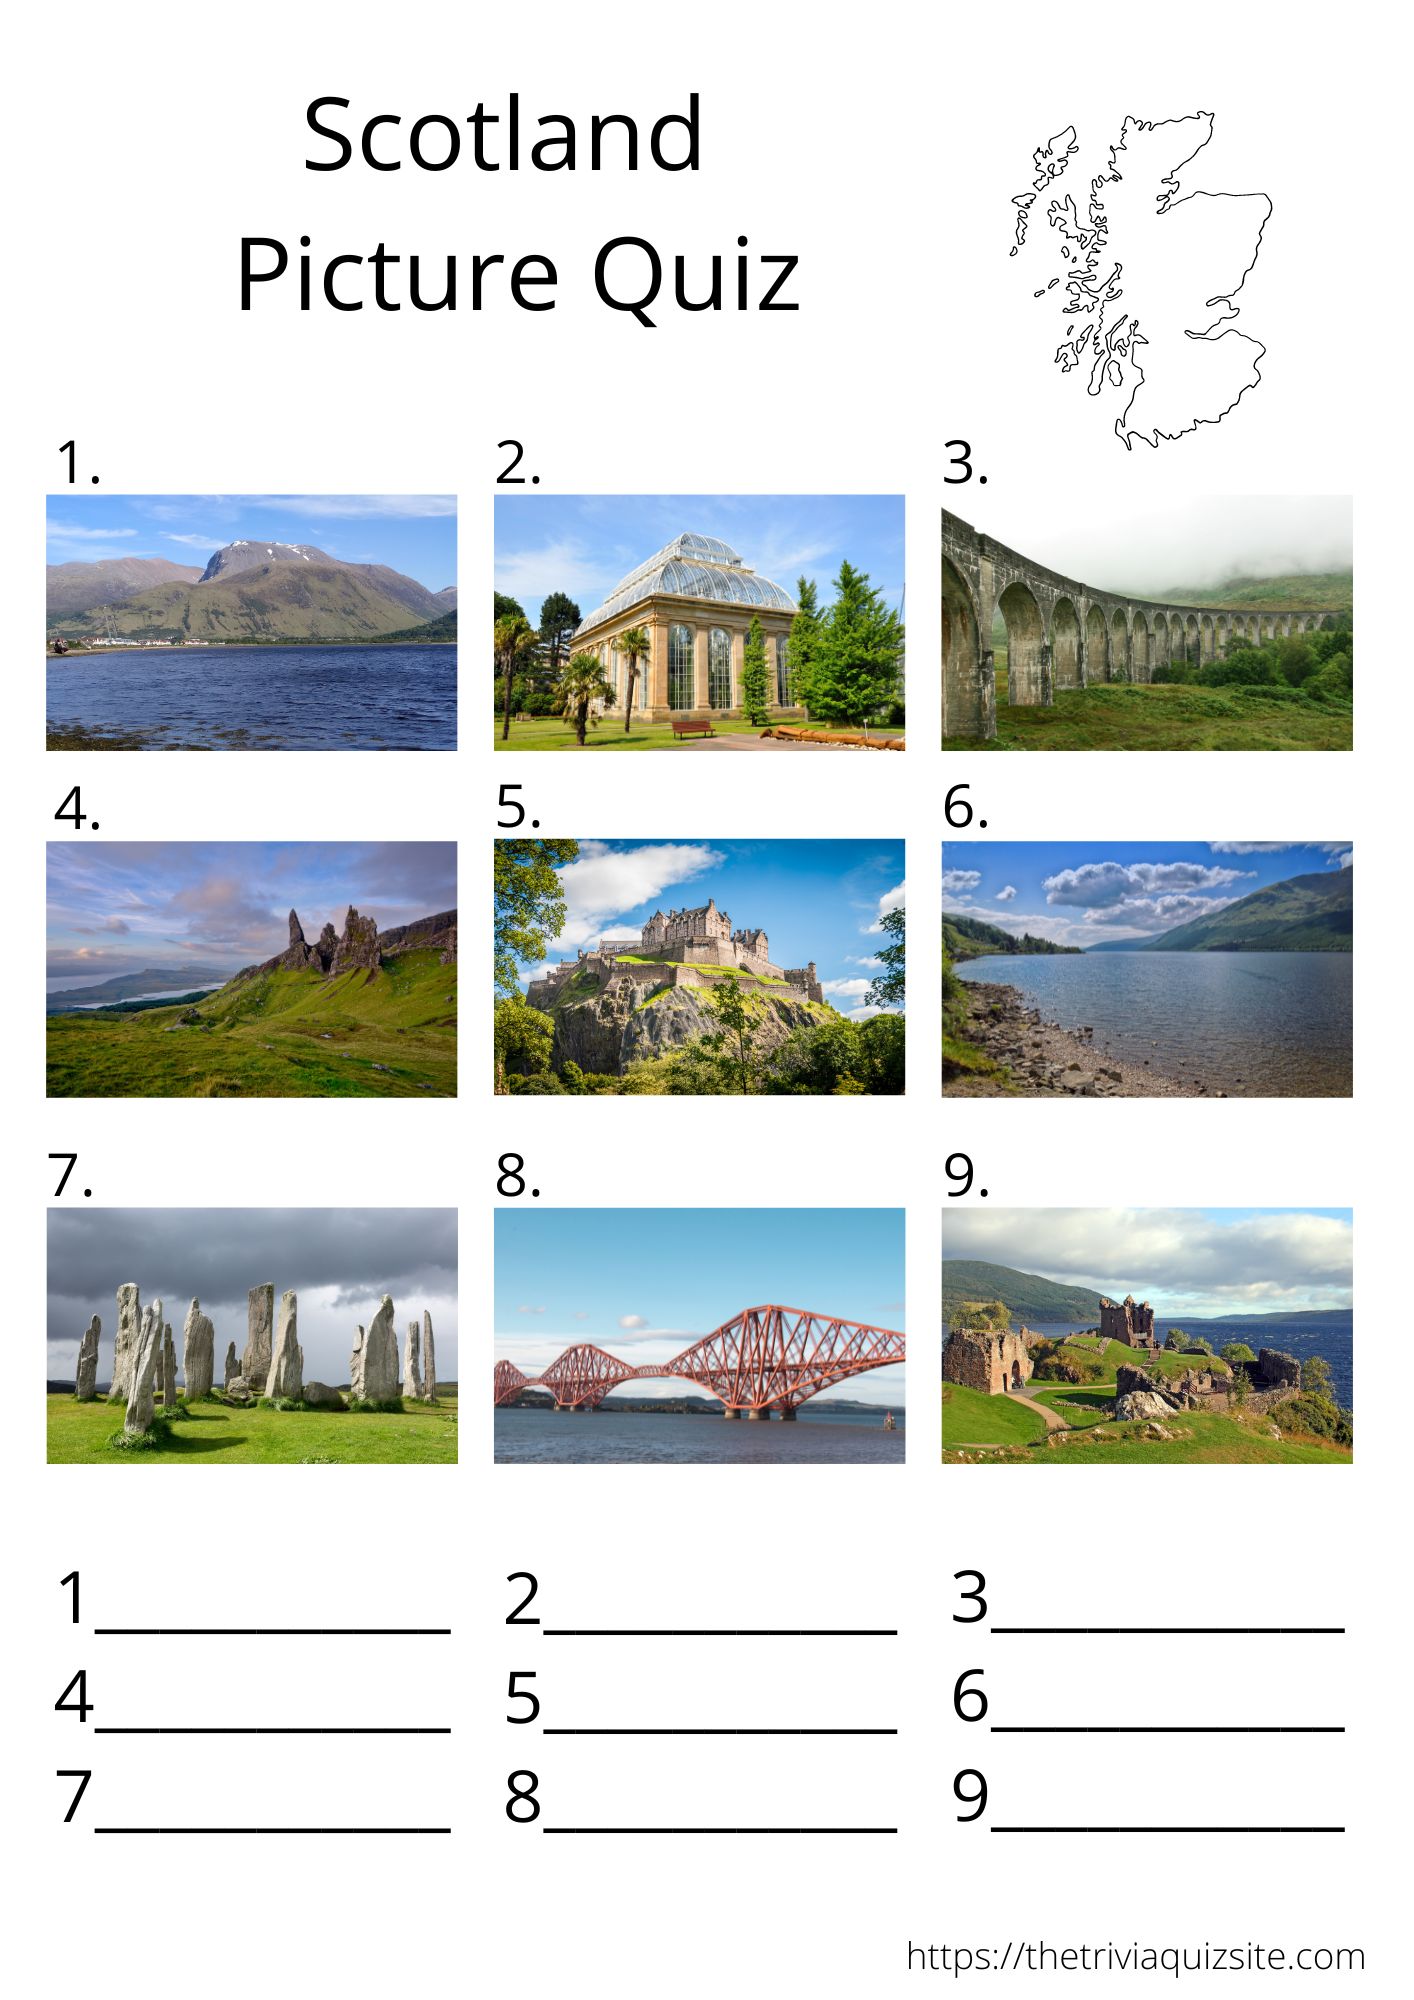 Scotland Picture quiz round